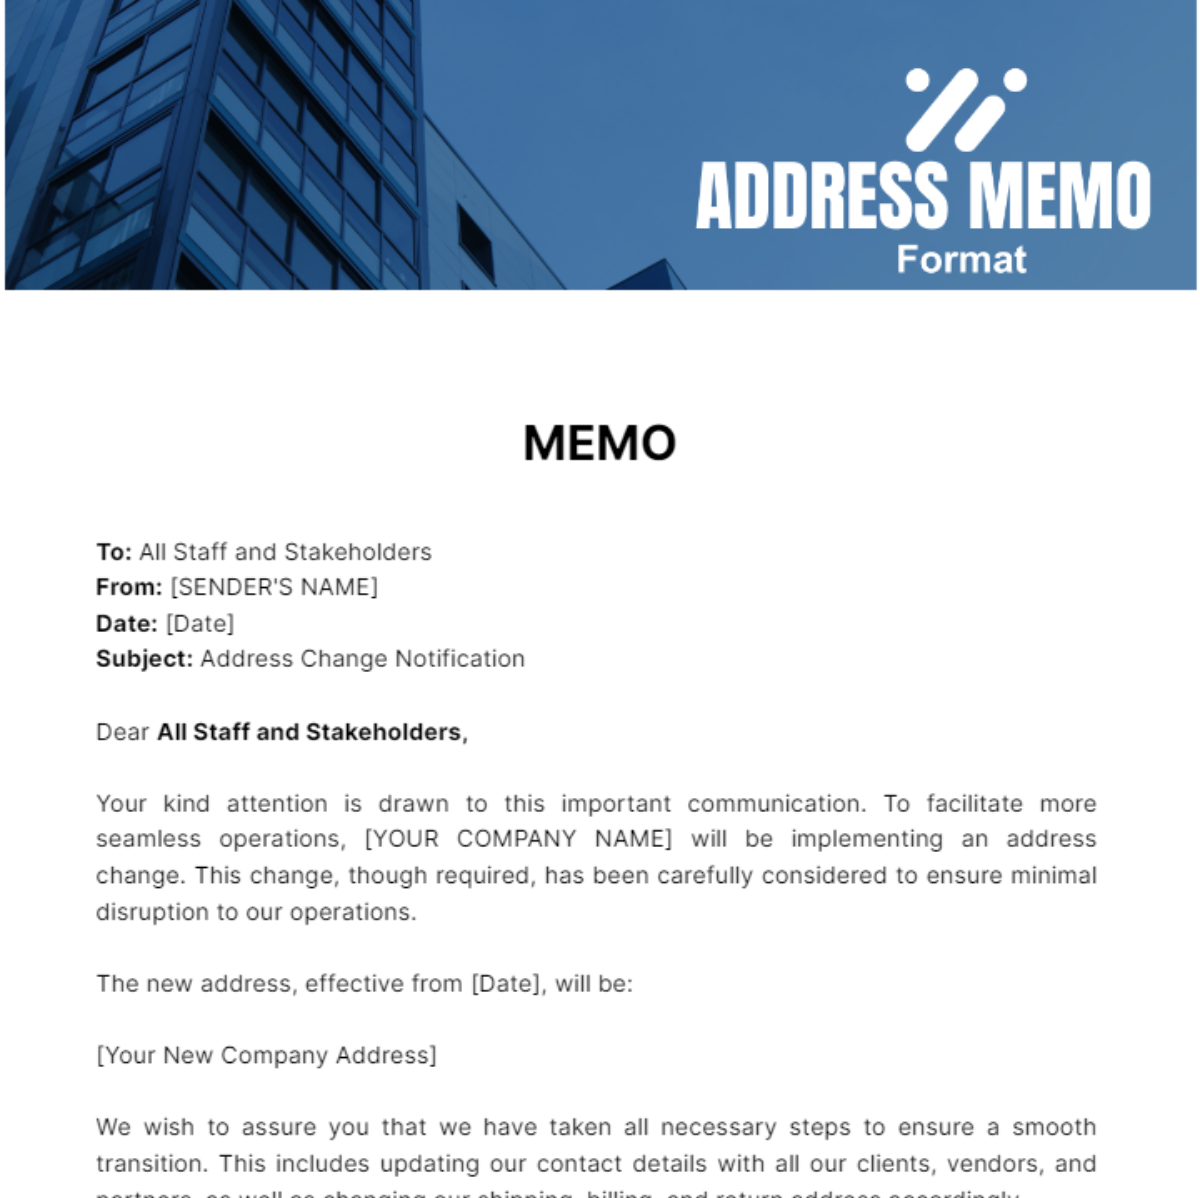 Address Memo Format